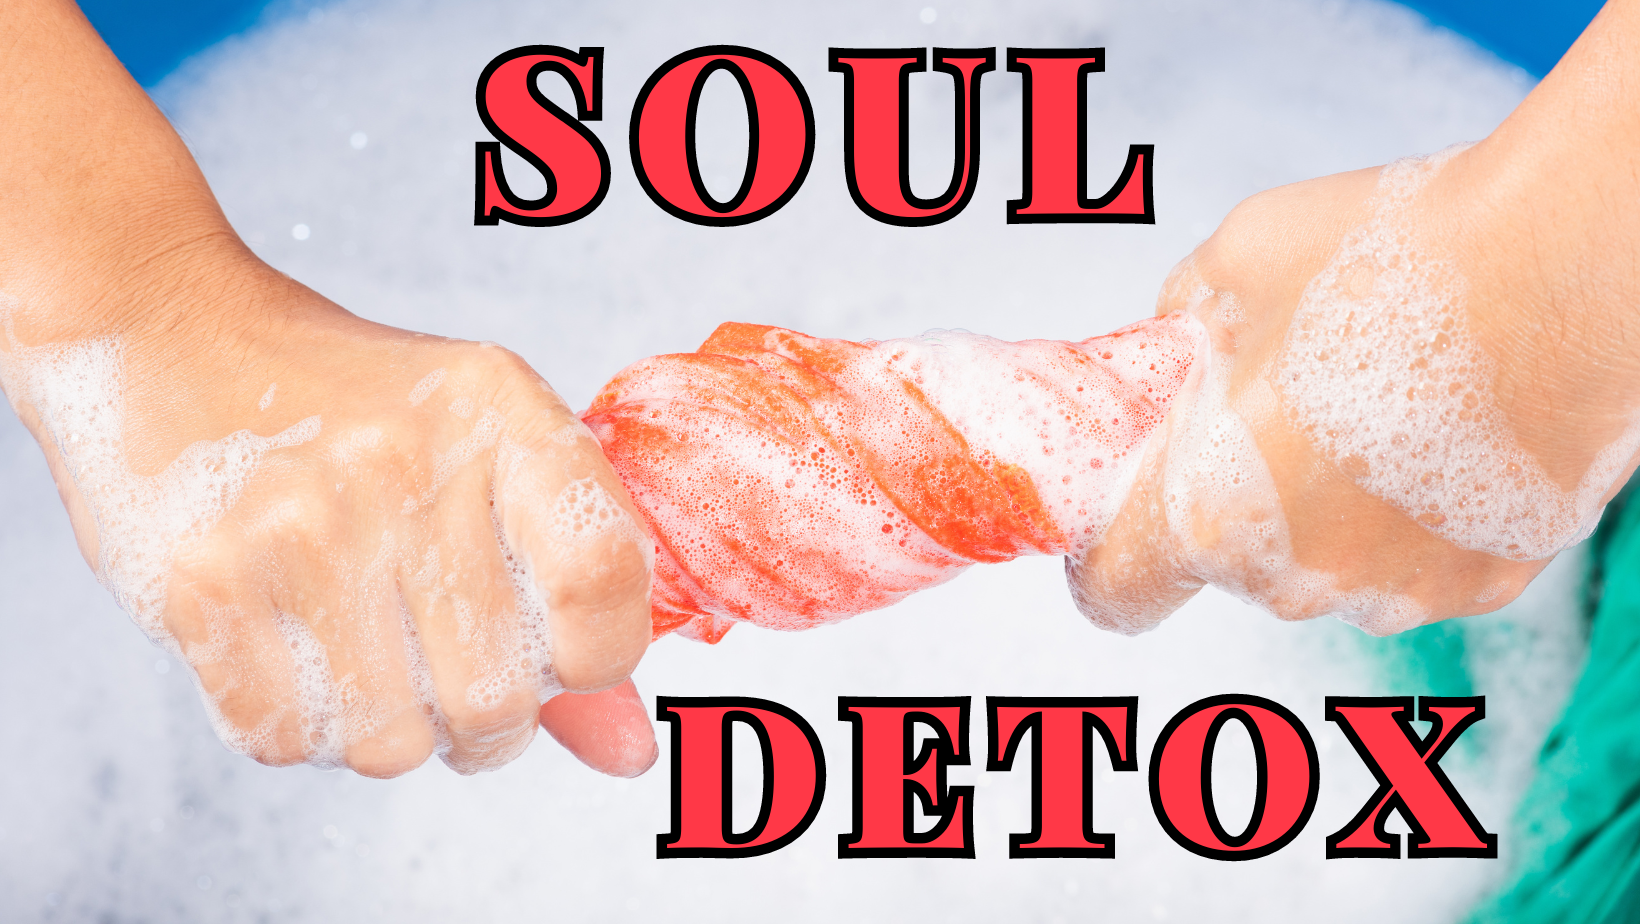 Soul Detox - Words